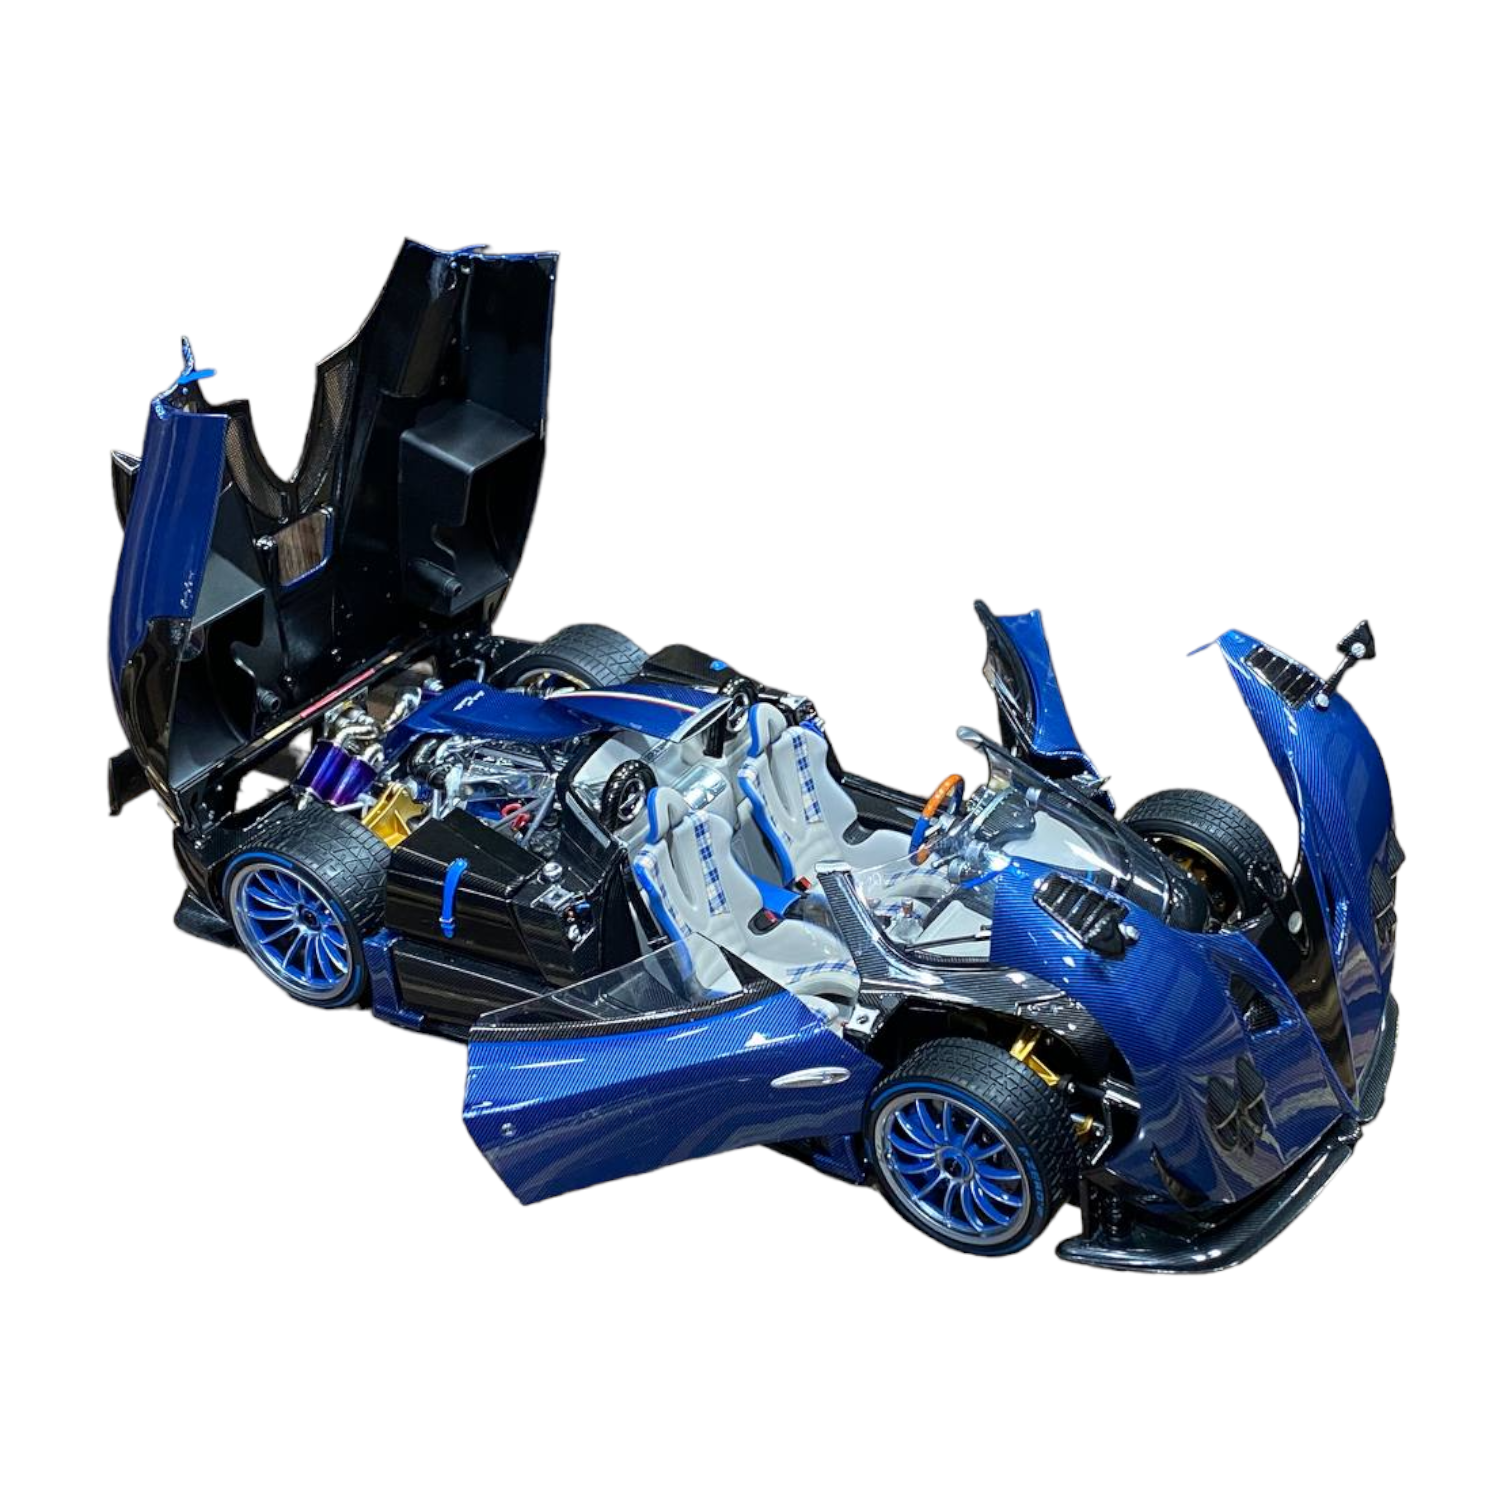 1/18 Pagani Zonda HP Barchetta Blue Carbon by LCD Model Car|Sold in Dturman.com Dubai UAE.